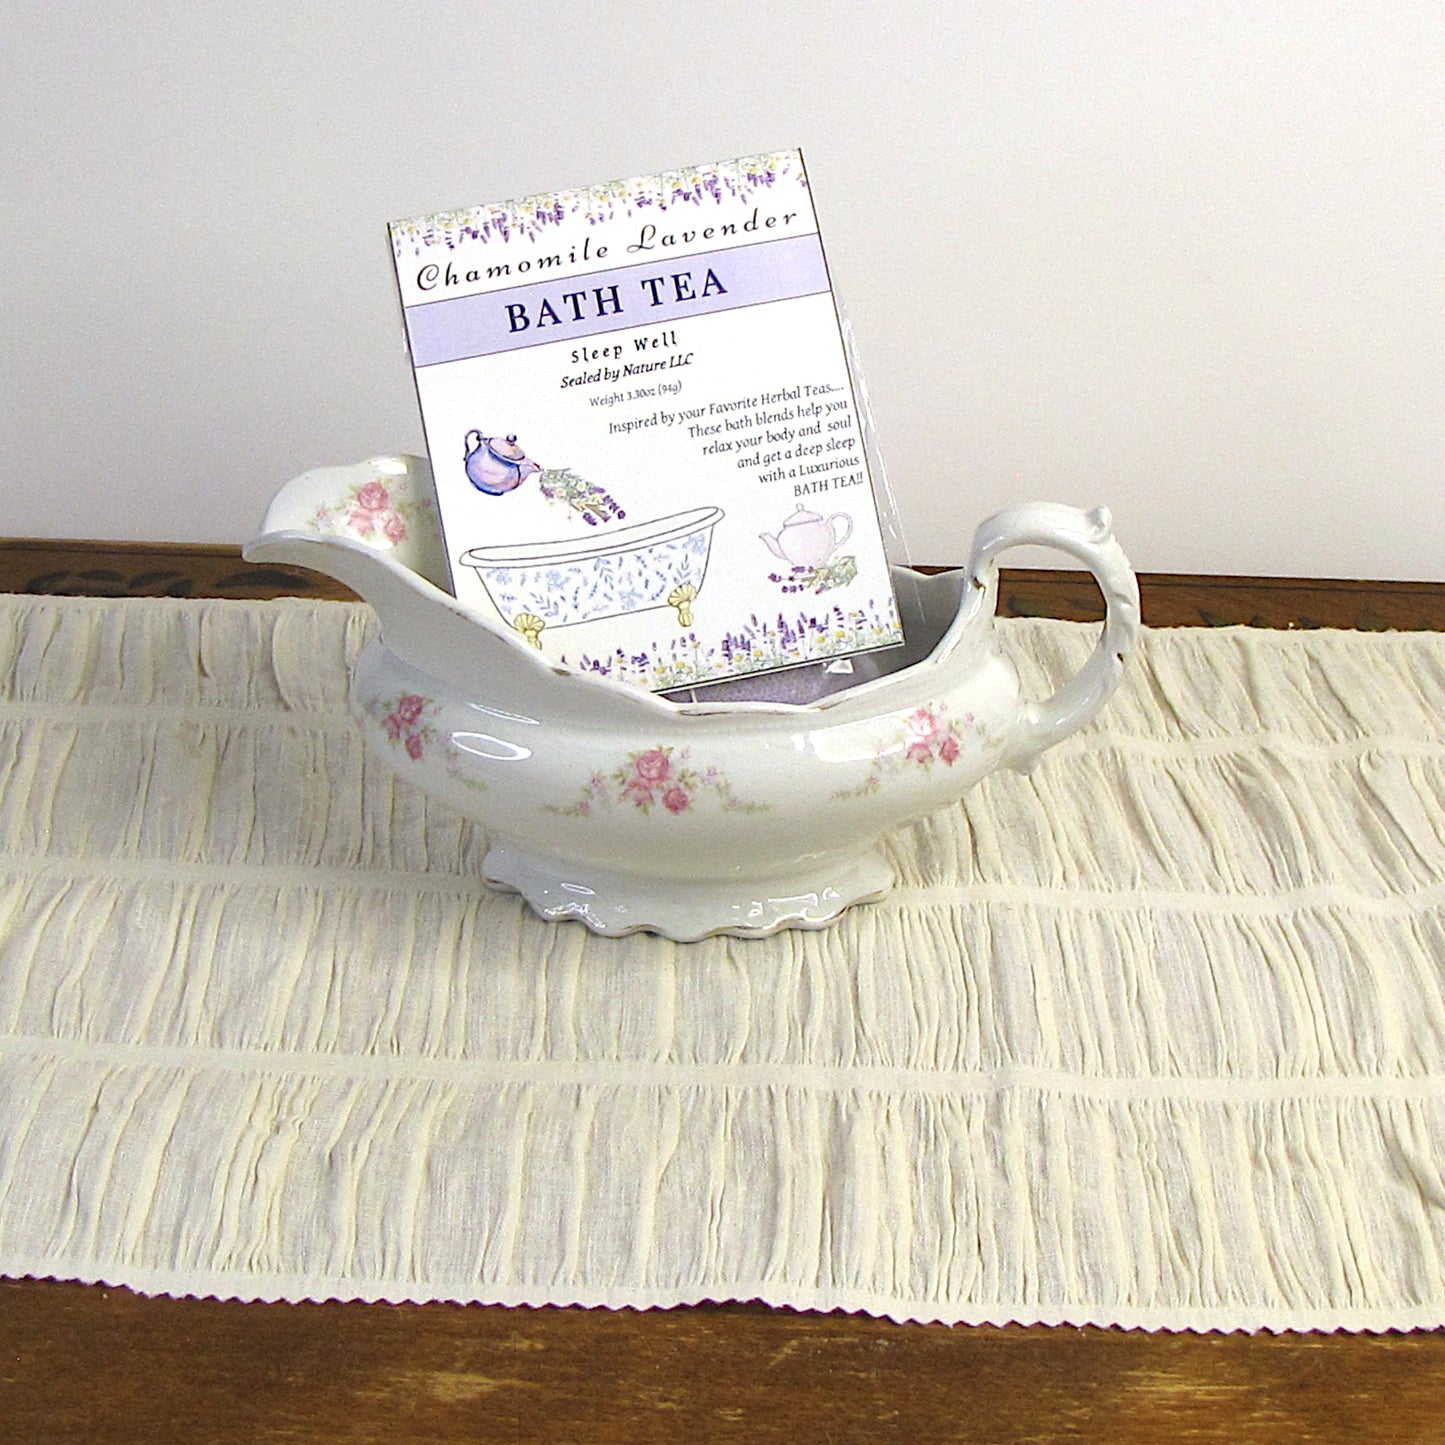 Bath Tea for Spa-like Experience